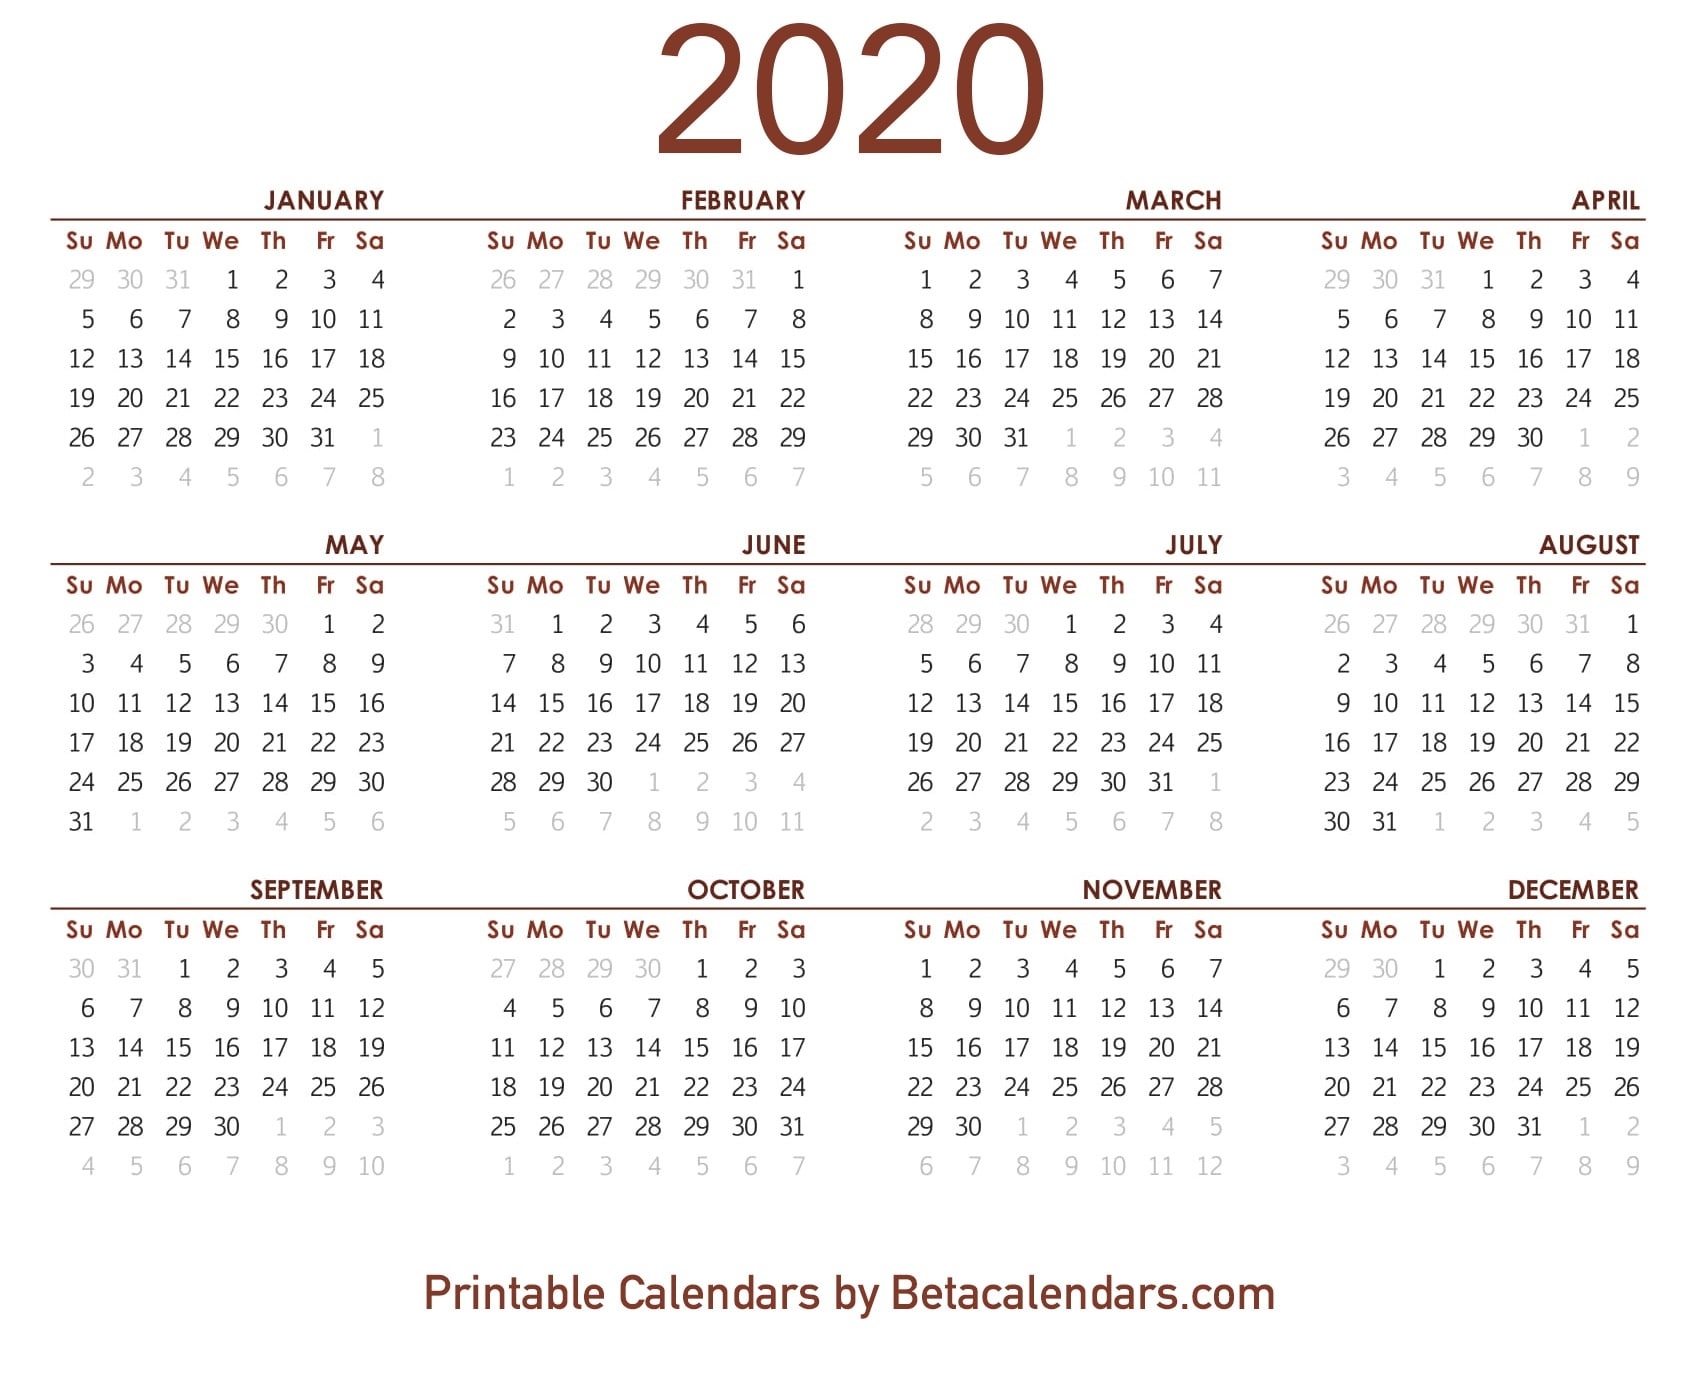 2020 Calendar - Free Printable Yearly Calendar 2020 2020 Calendar To Print